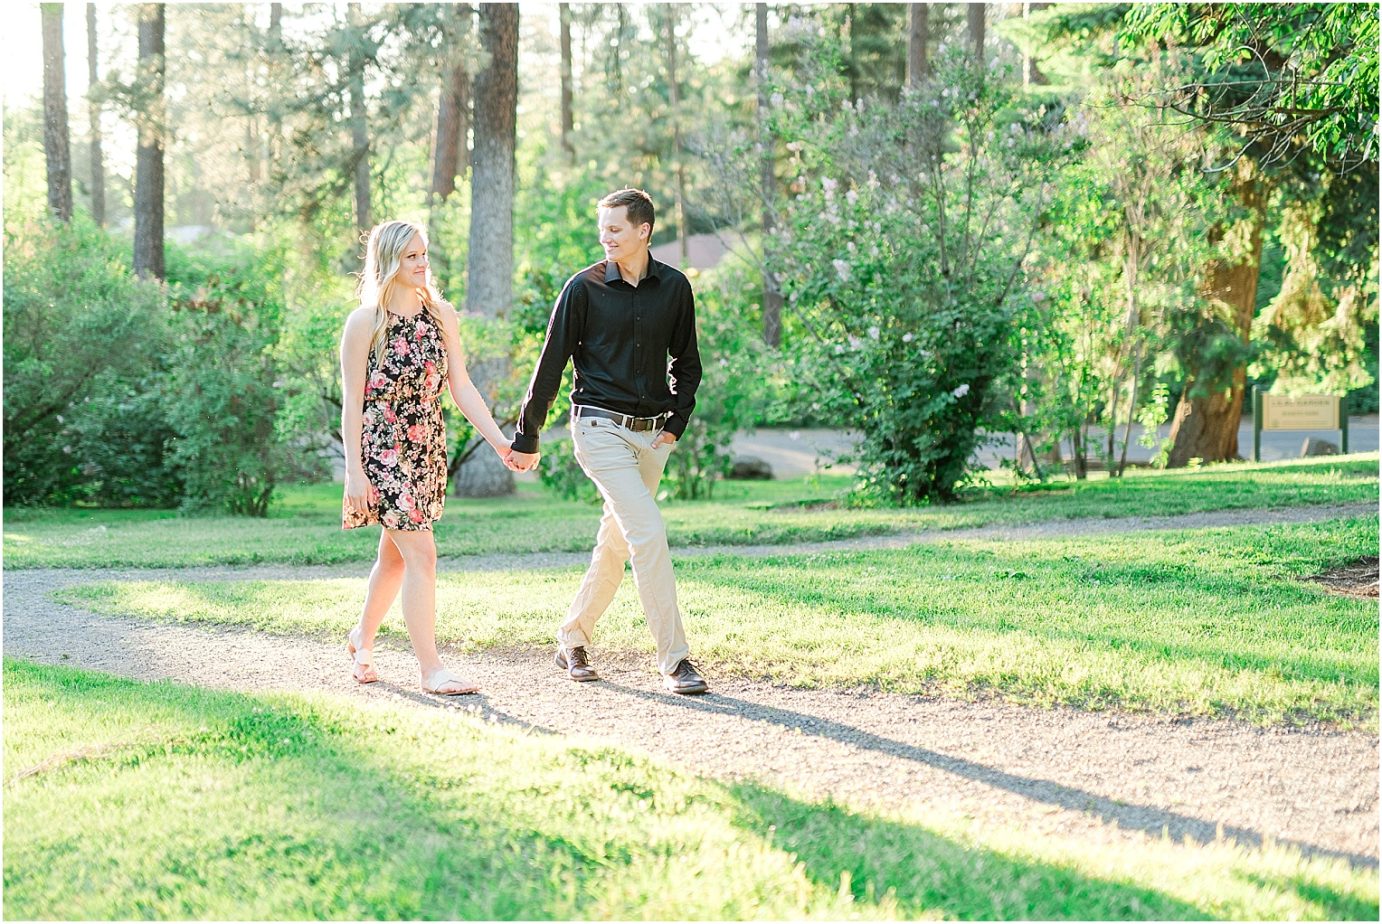 Manito Park Engagement Session Spokane Photographer Bryan and Olivia Walking on path